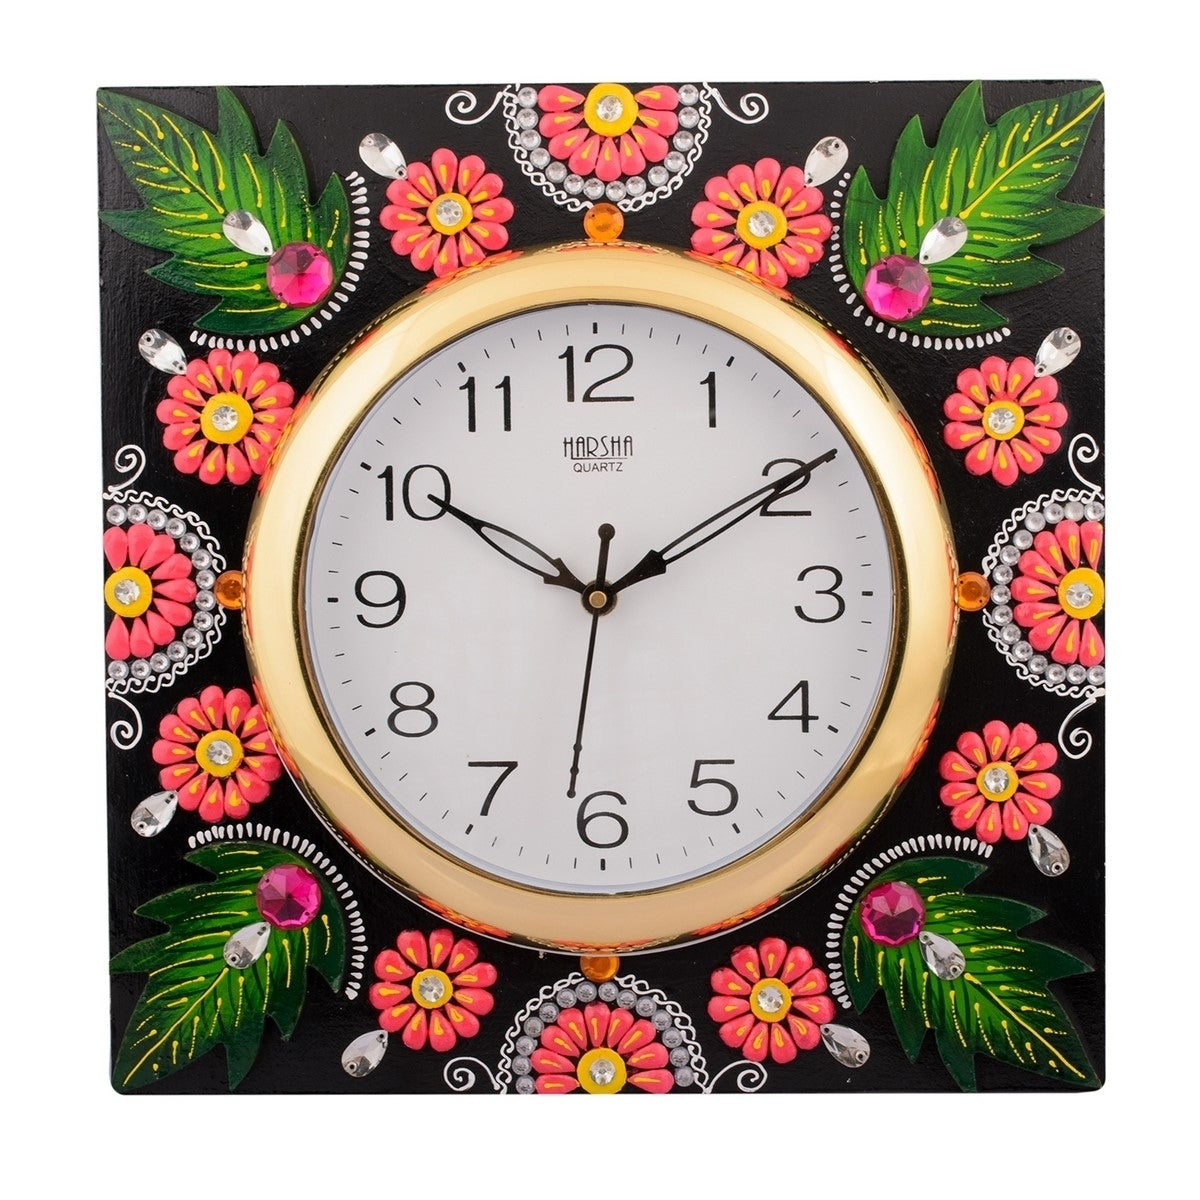 Wooden Papier Mache Florid Leaf Design Handcrafted Wall Clock